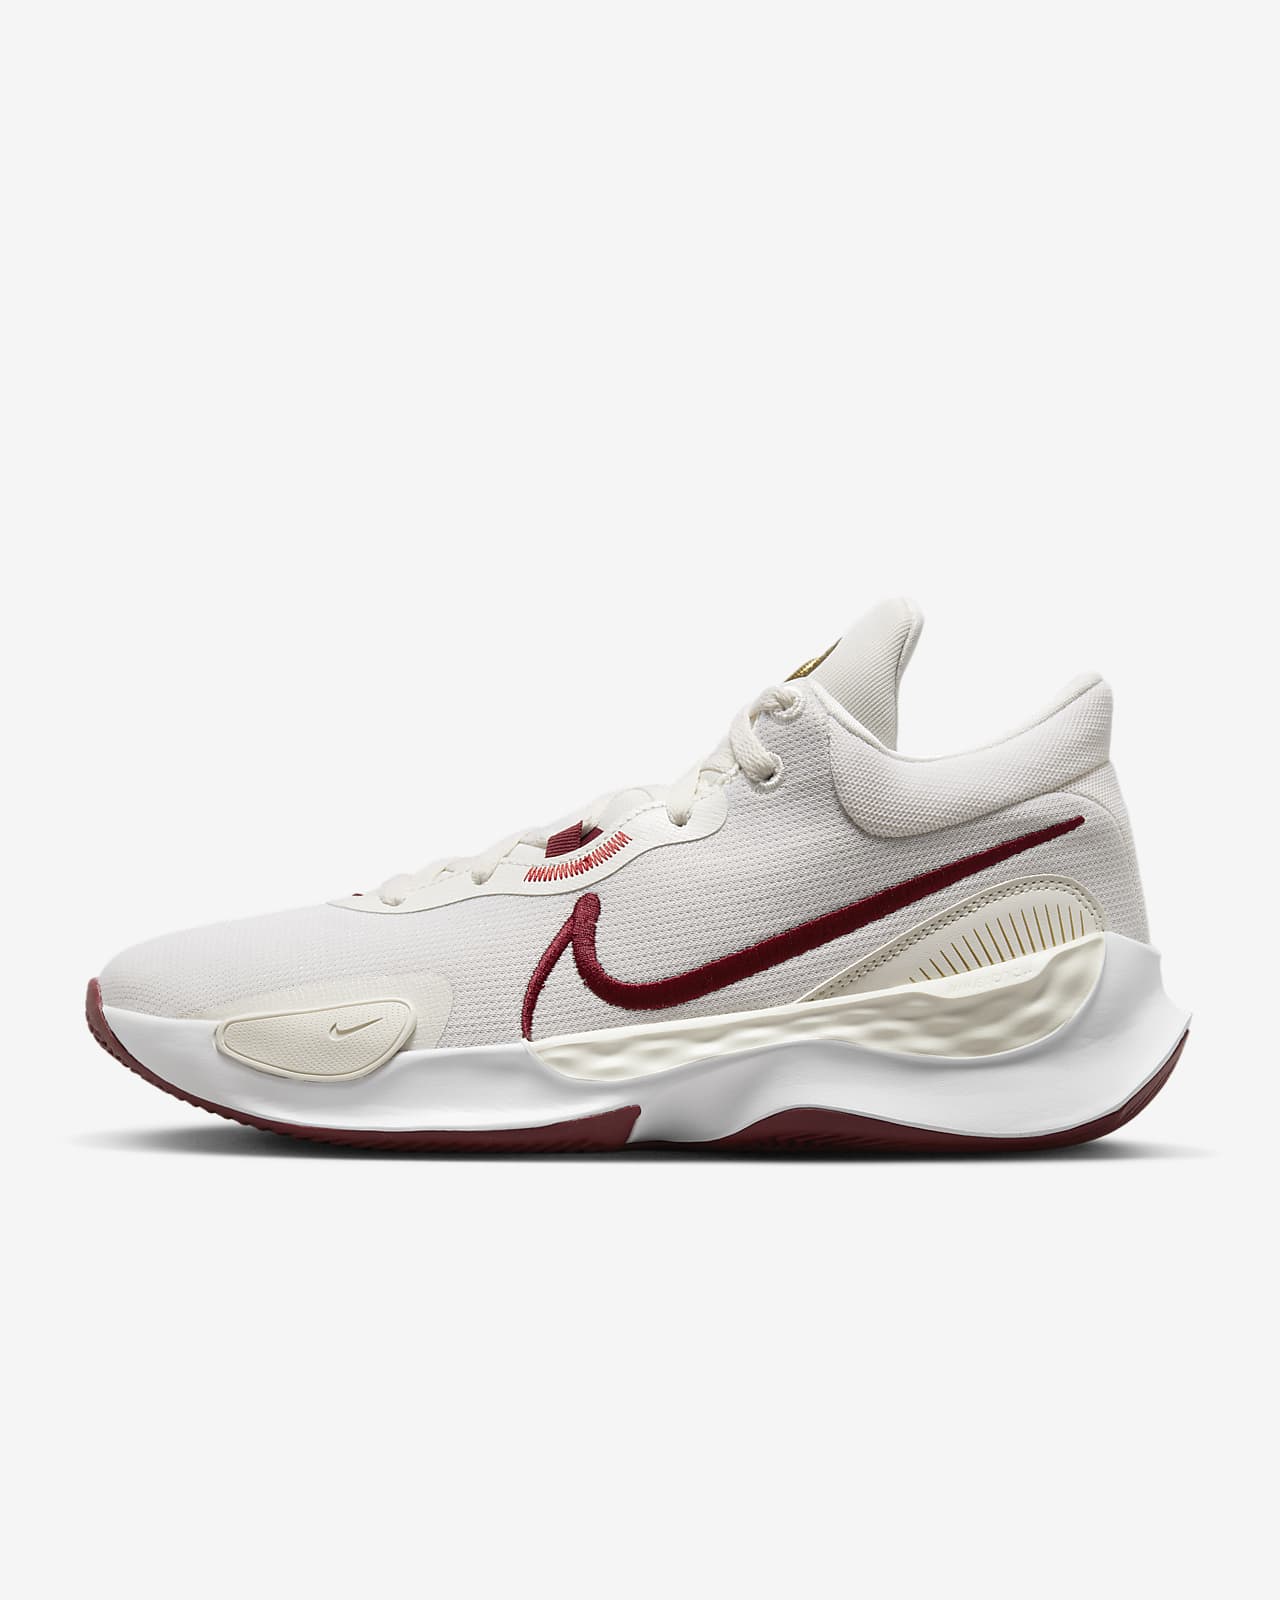 Nike Elevate 3 Basketball Shoes